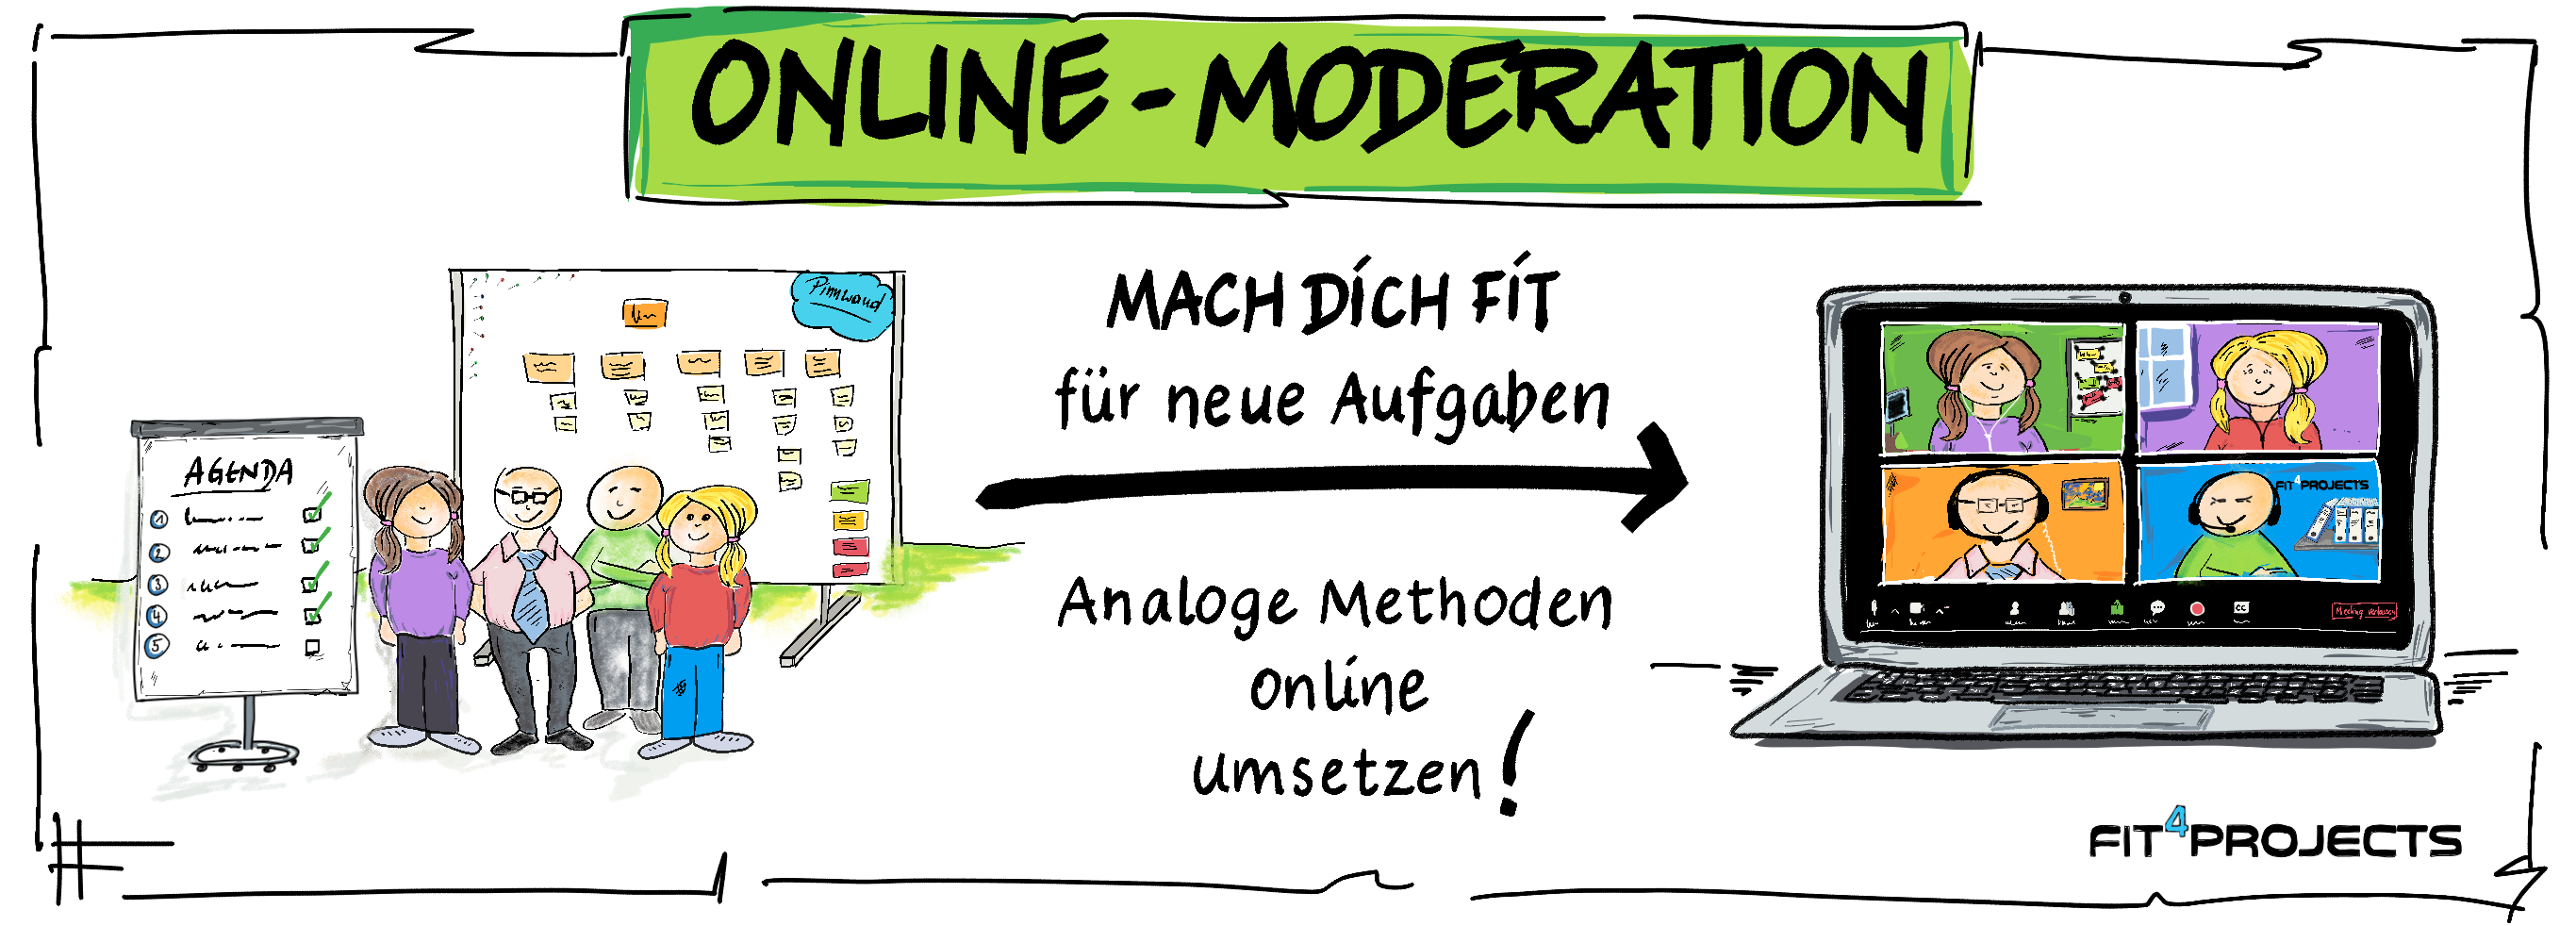 Online Moderation